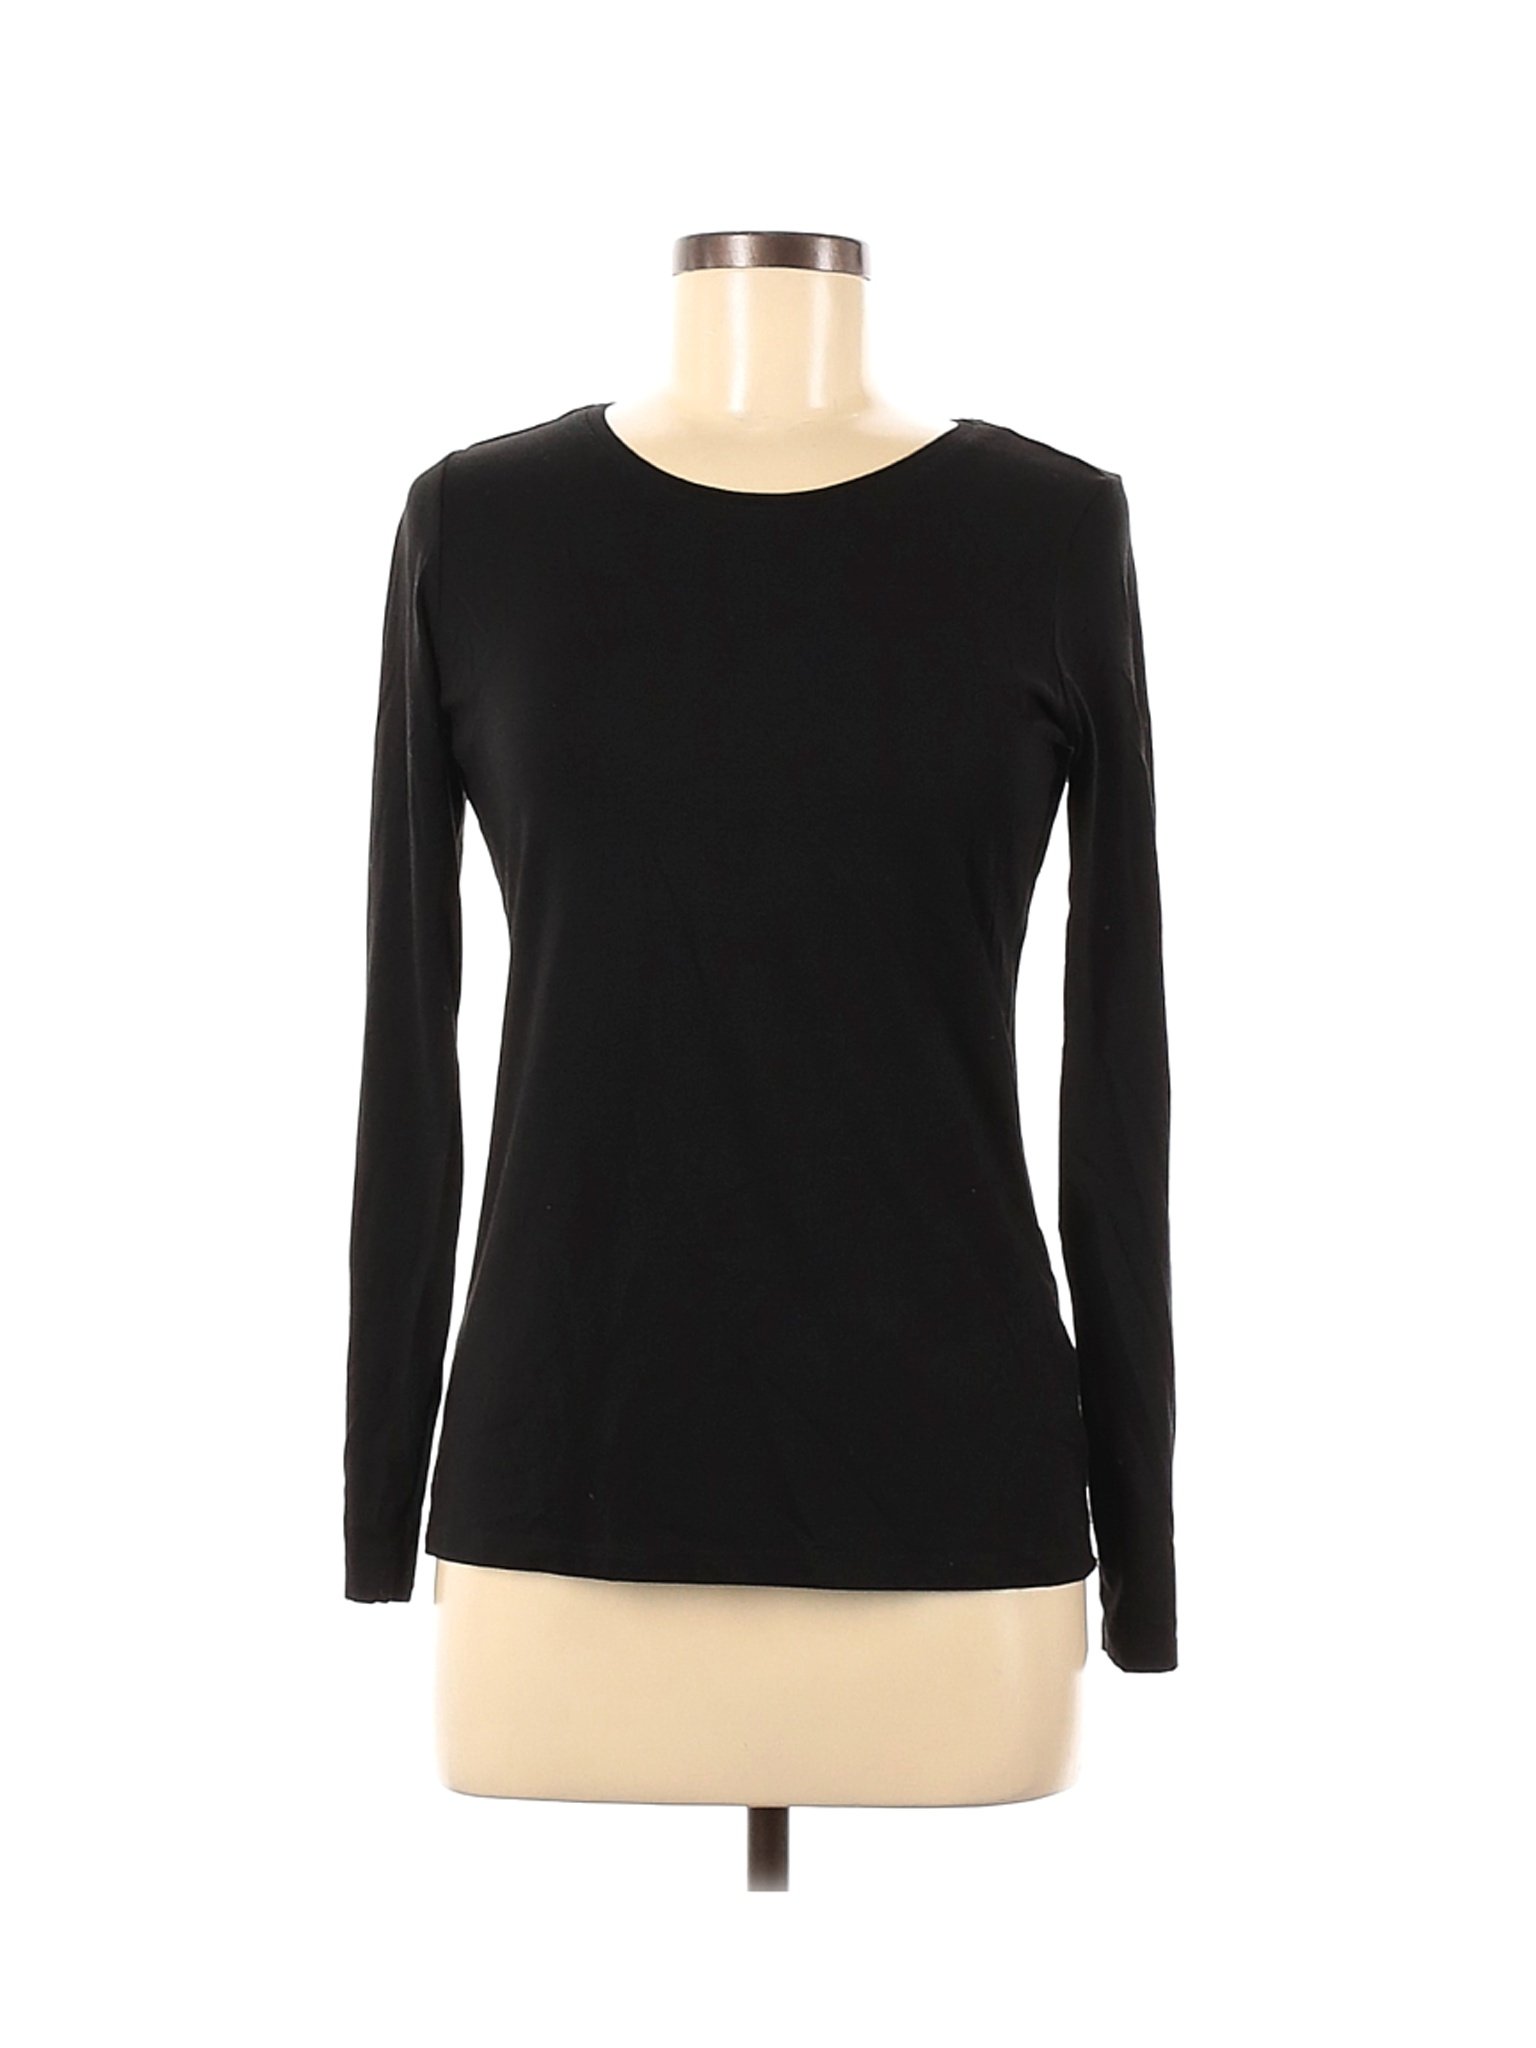 Tahari Women Black Long Sleeve T-Shirt M | eBay